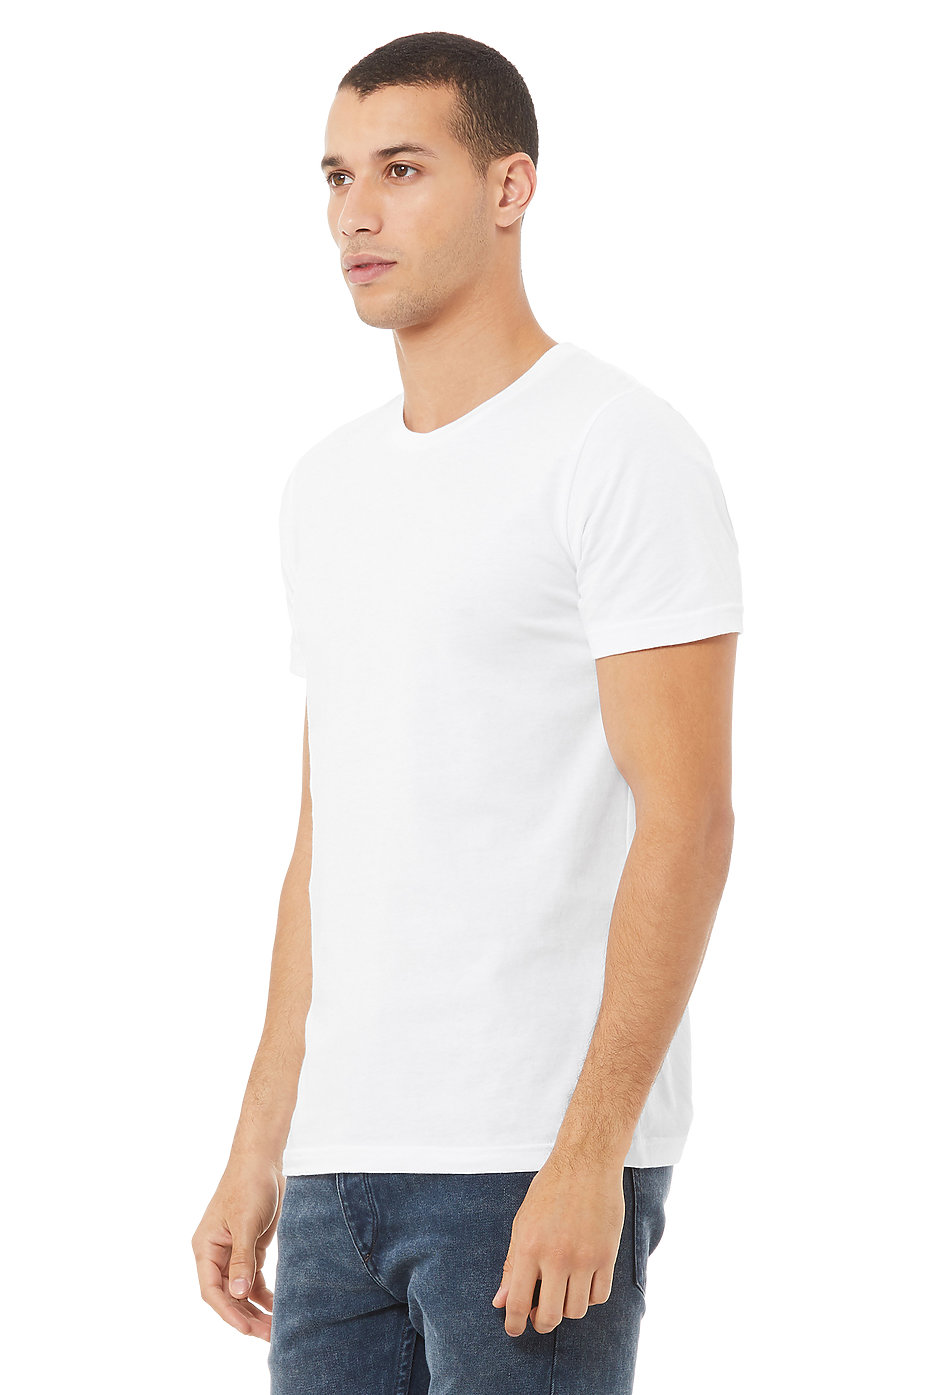 Download Jersey T Shirts Mens Wholesale Clothing Bulk Plain Blank T Shirts Bella Canvas